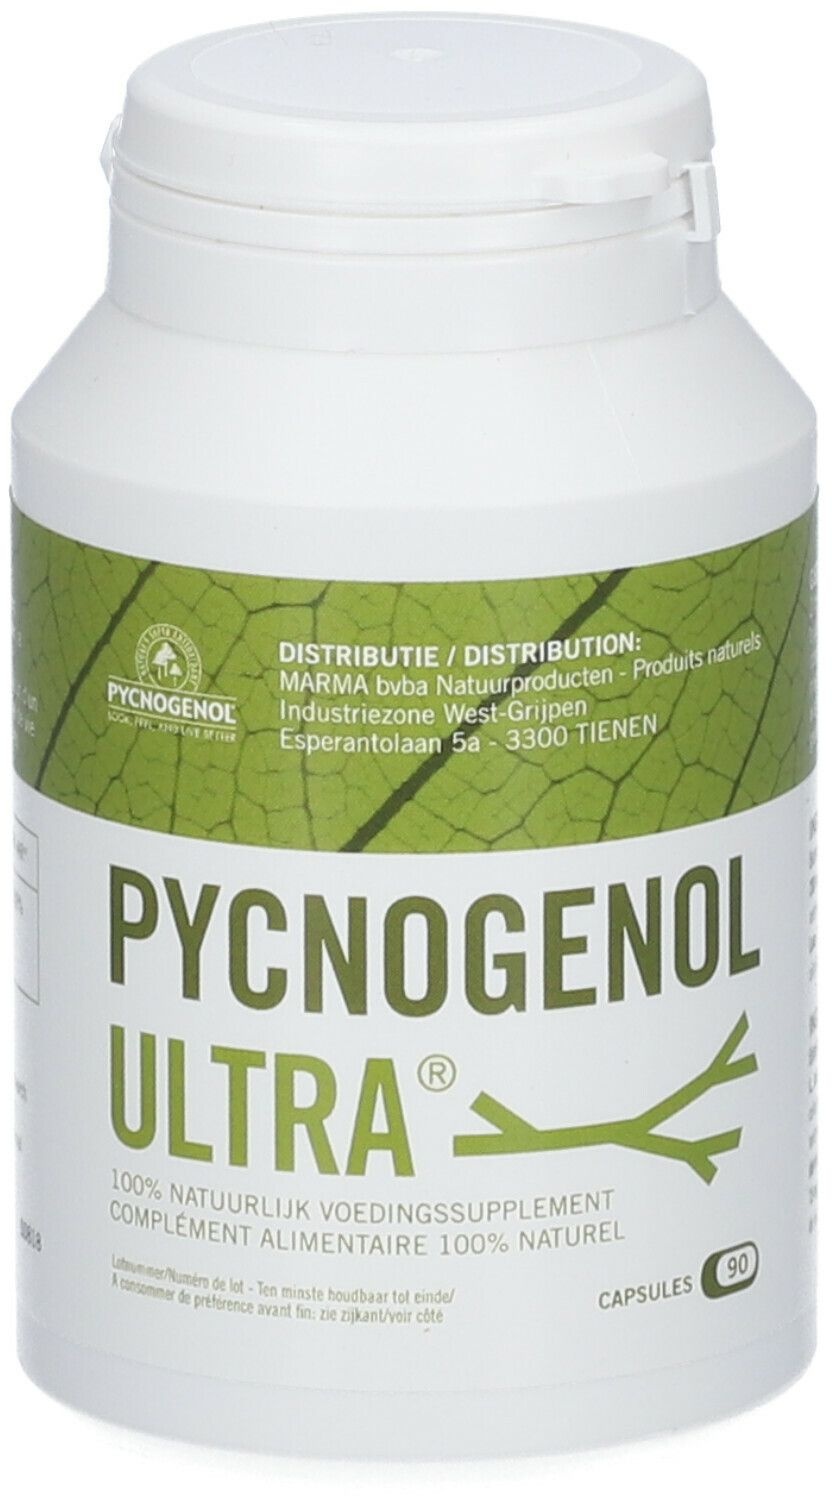 Pycnogenol Ultra 90 pc(s) capsule(s)